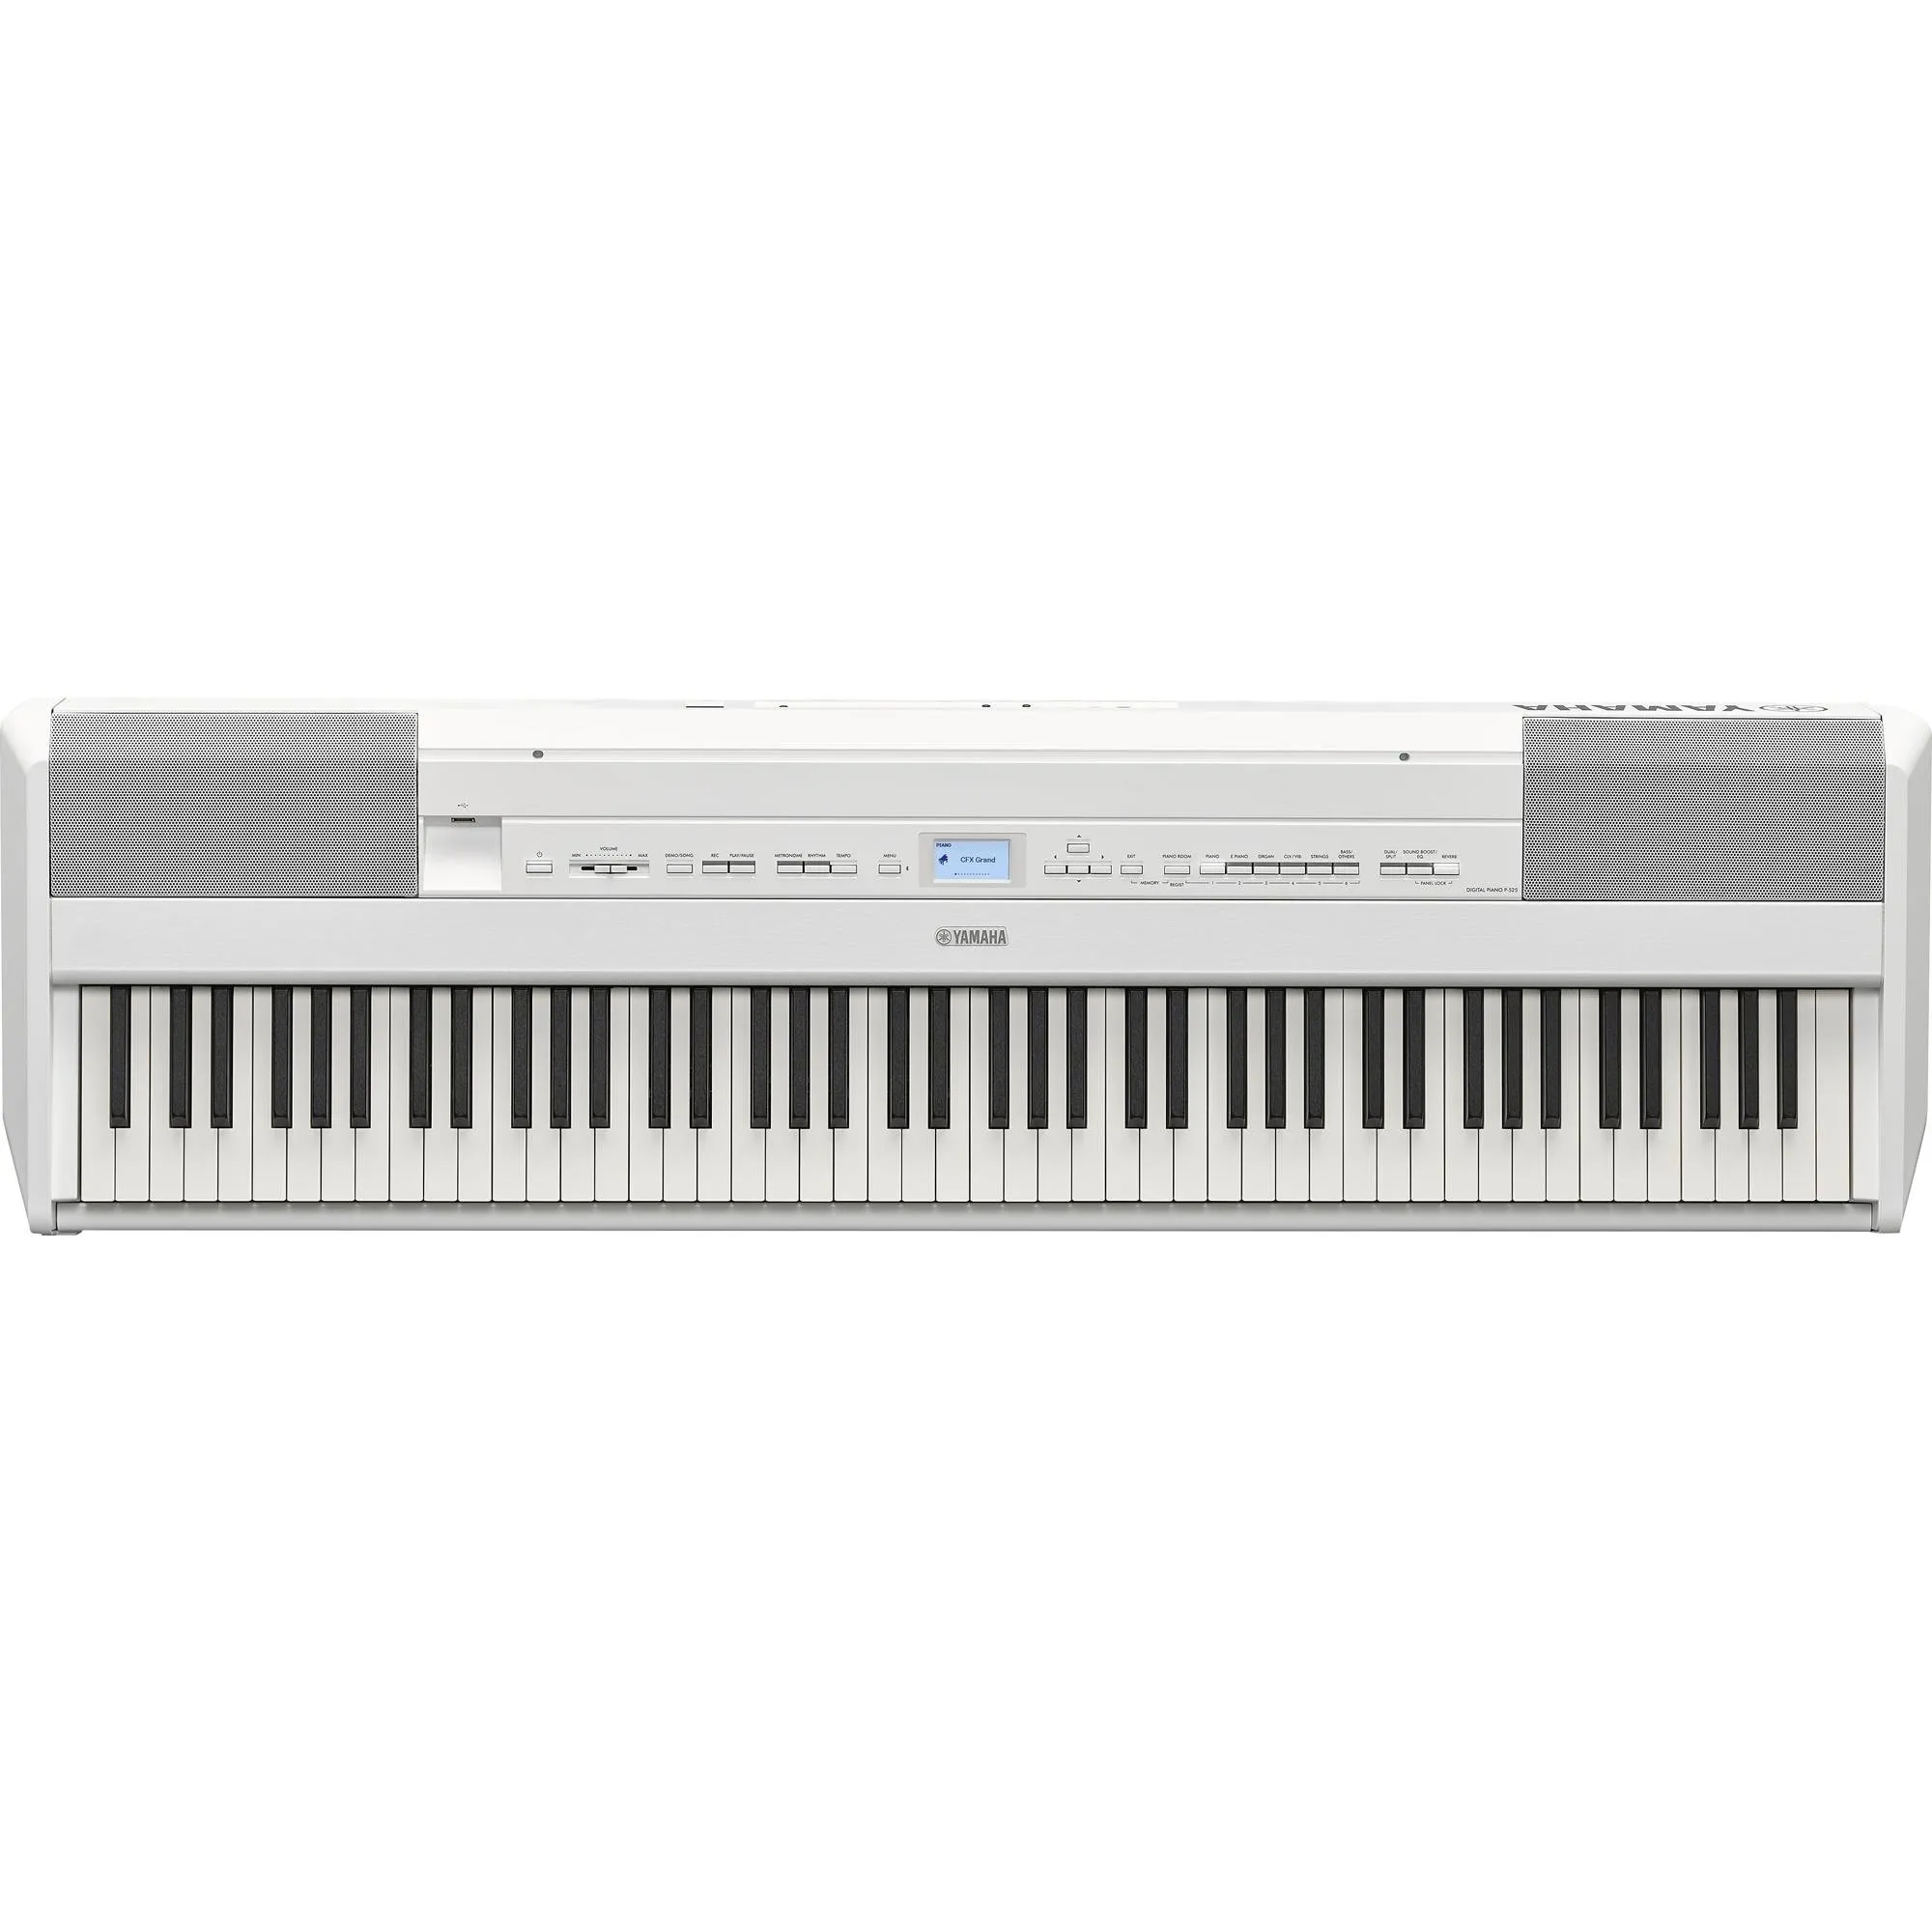 PIANO DIGITAL YAMAHA P-525 BR (82908)